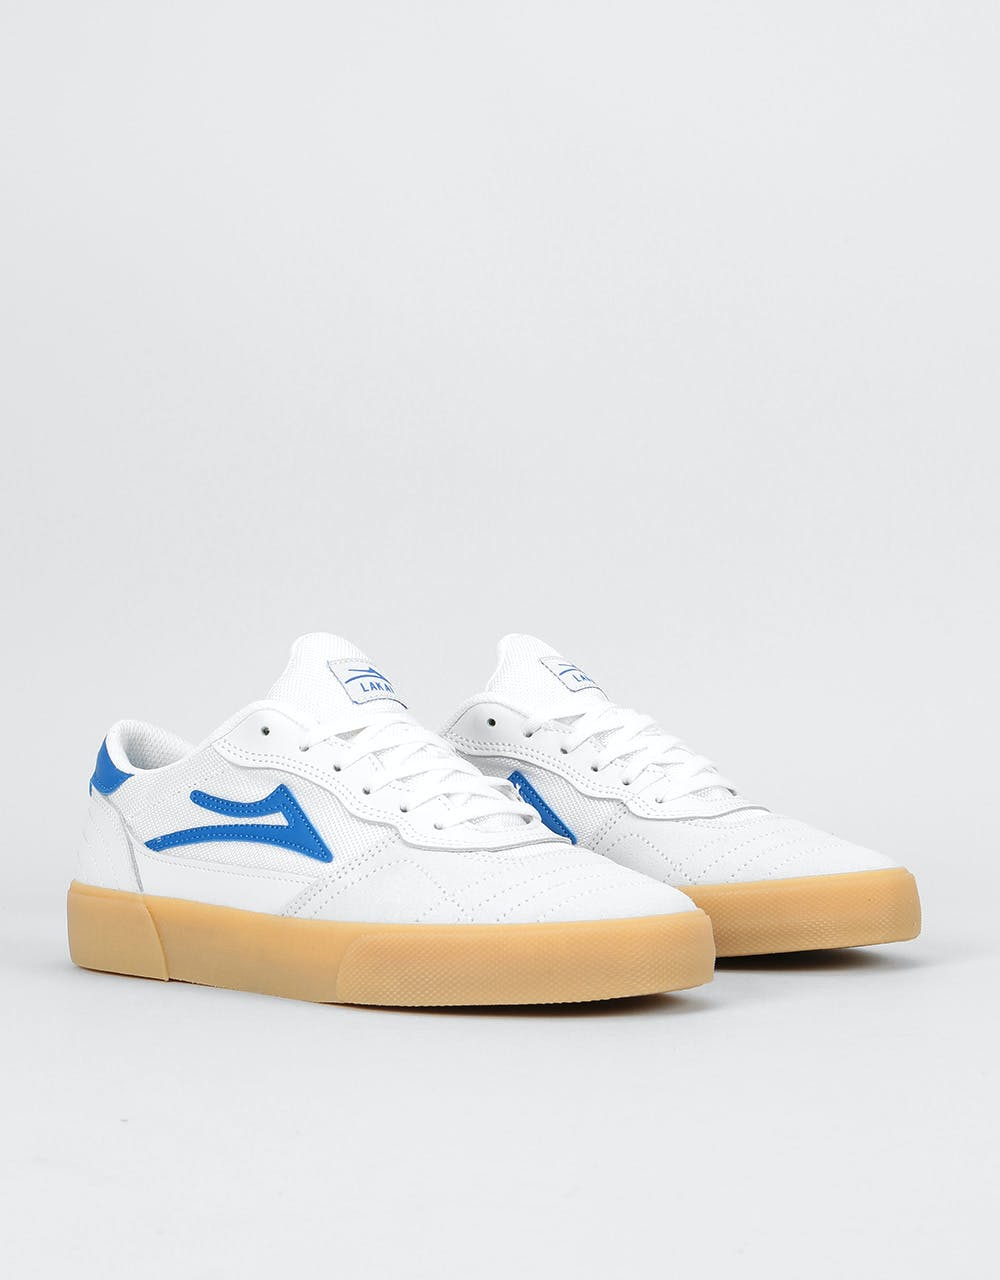 Lakai Cambridge Skate Shoes - White/Blue Suede